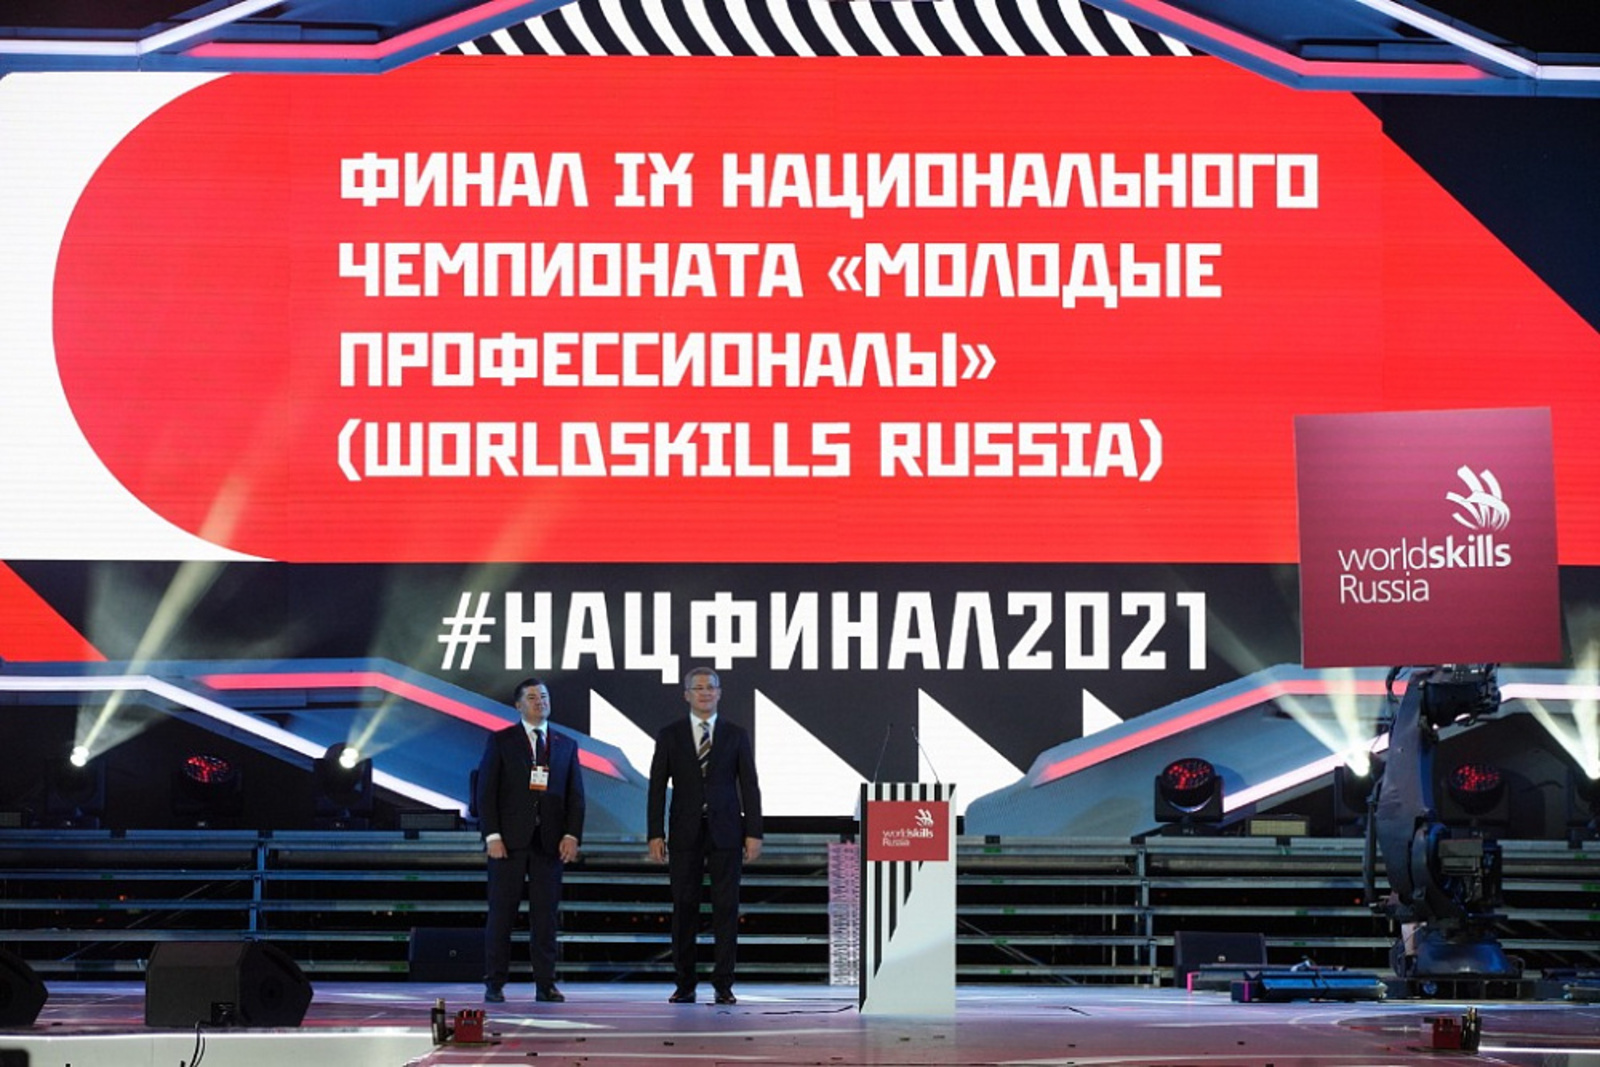 Уфа принимает финал IX Национального чемпионата WorldSkills Russia – 2021